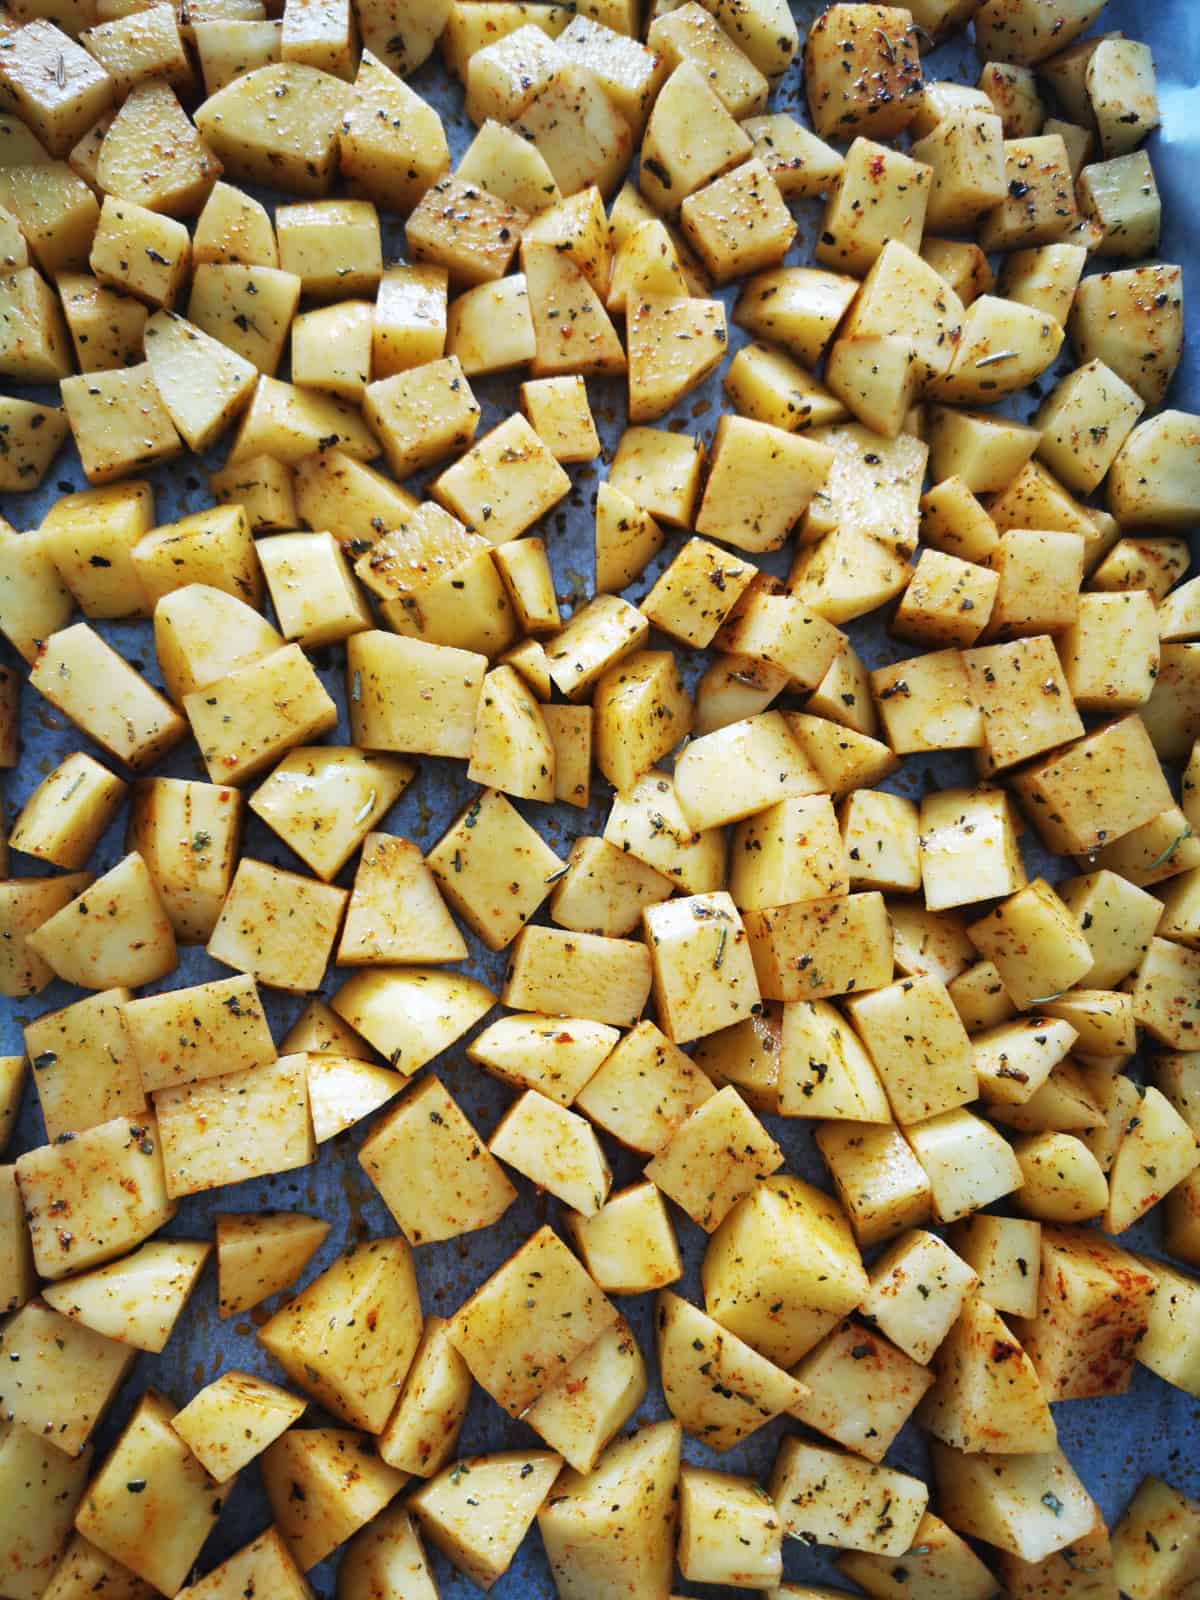 Potato Cubes seasoned and placed on baking sheet